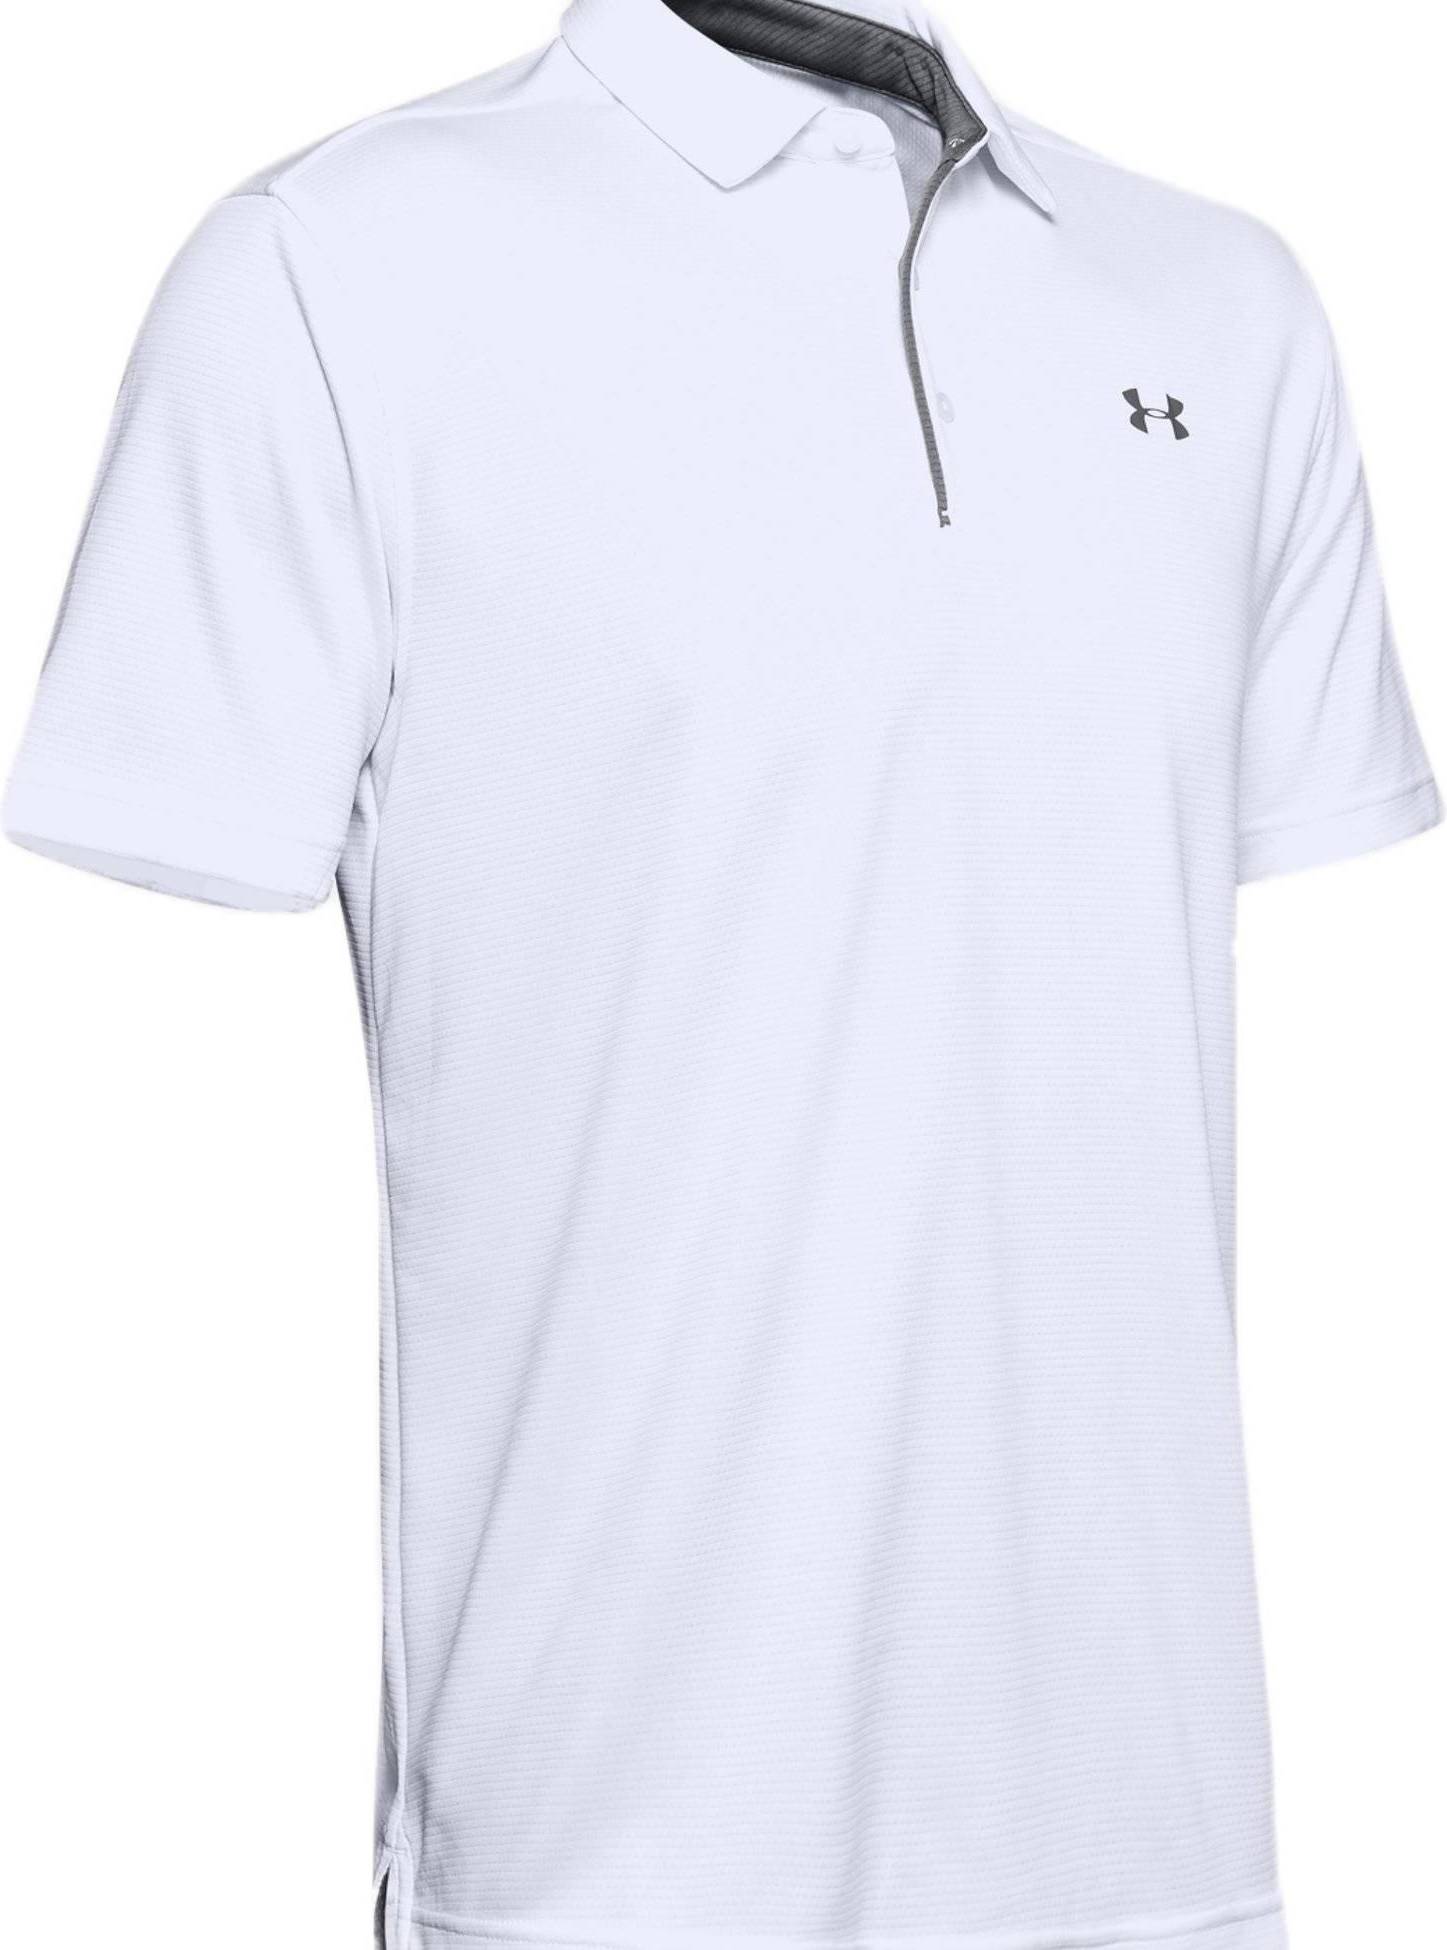 Under Armour Tech Polo Shirt Men - White/Graphite • Pris